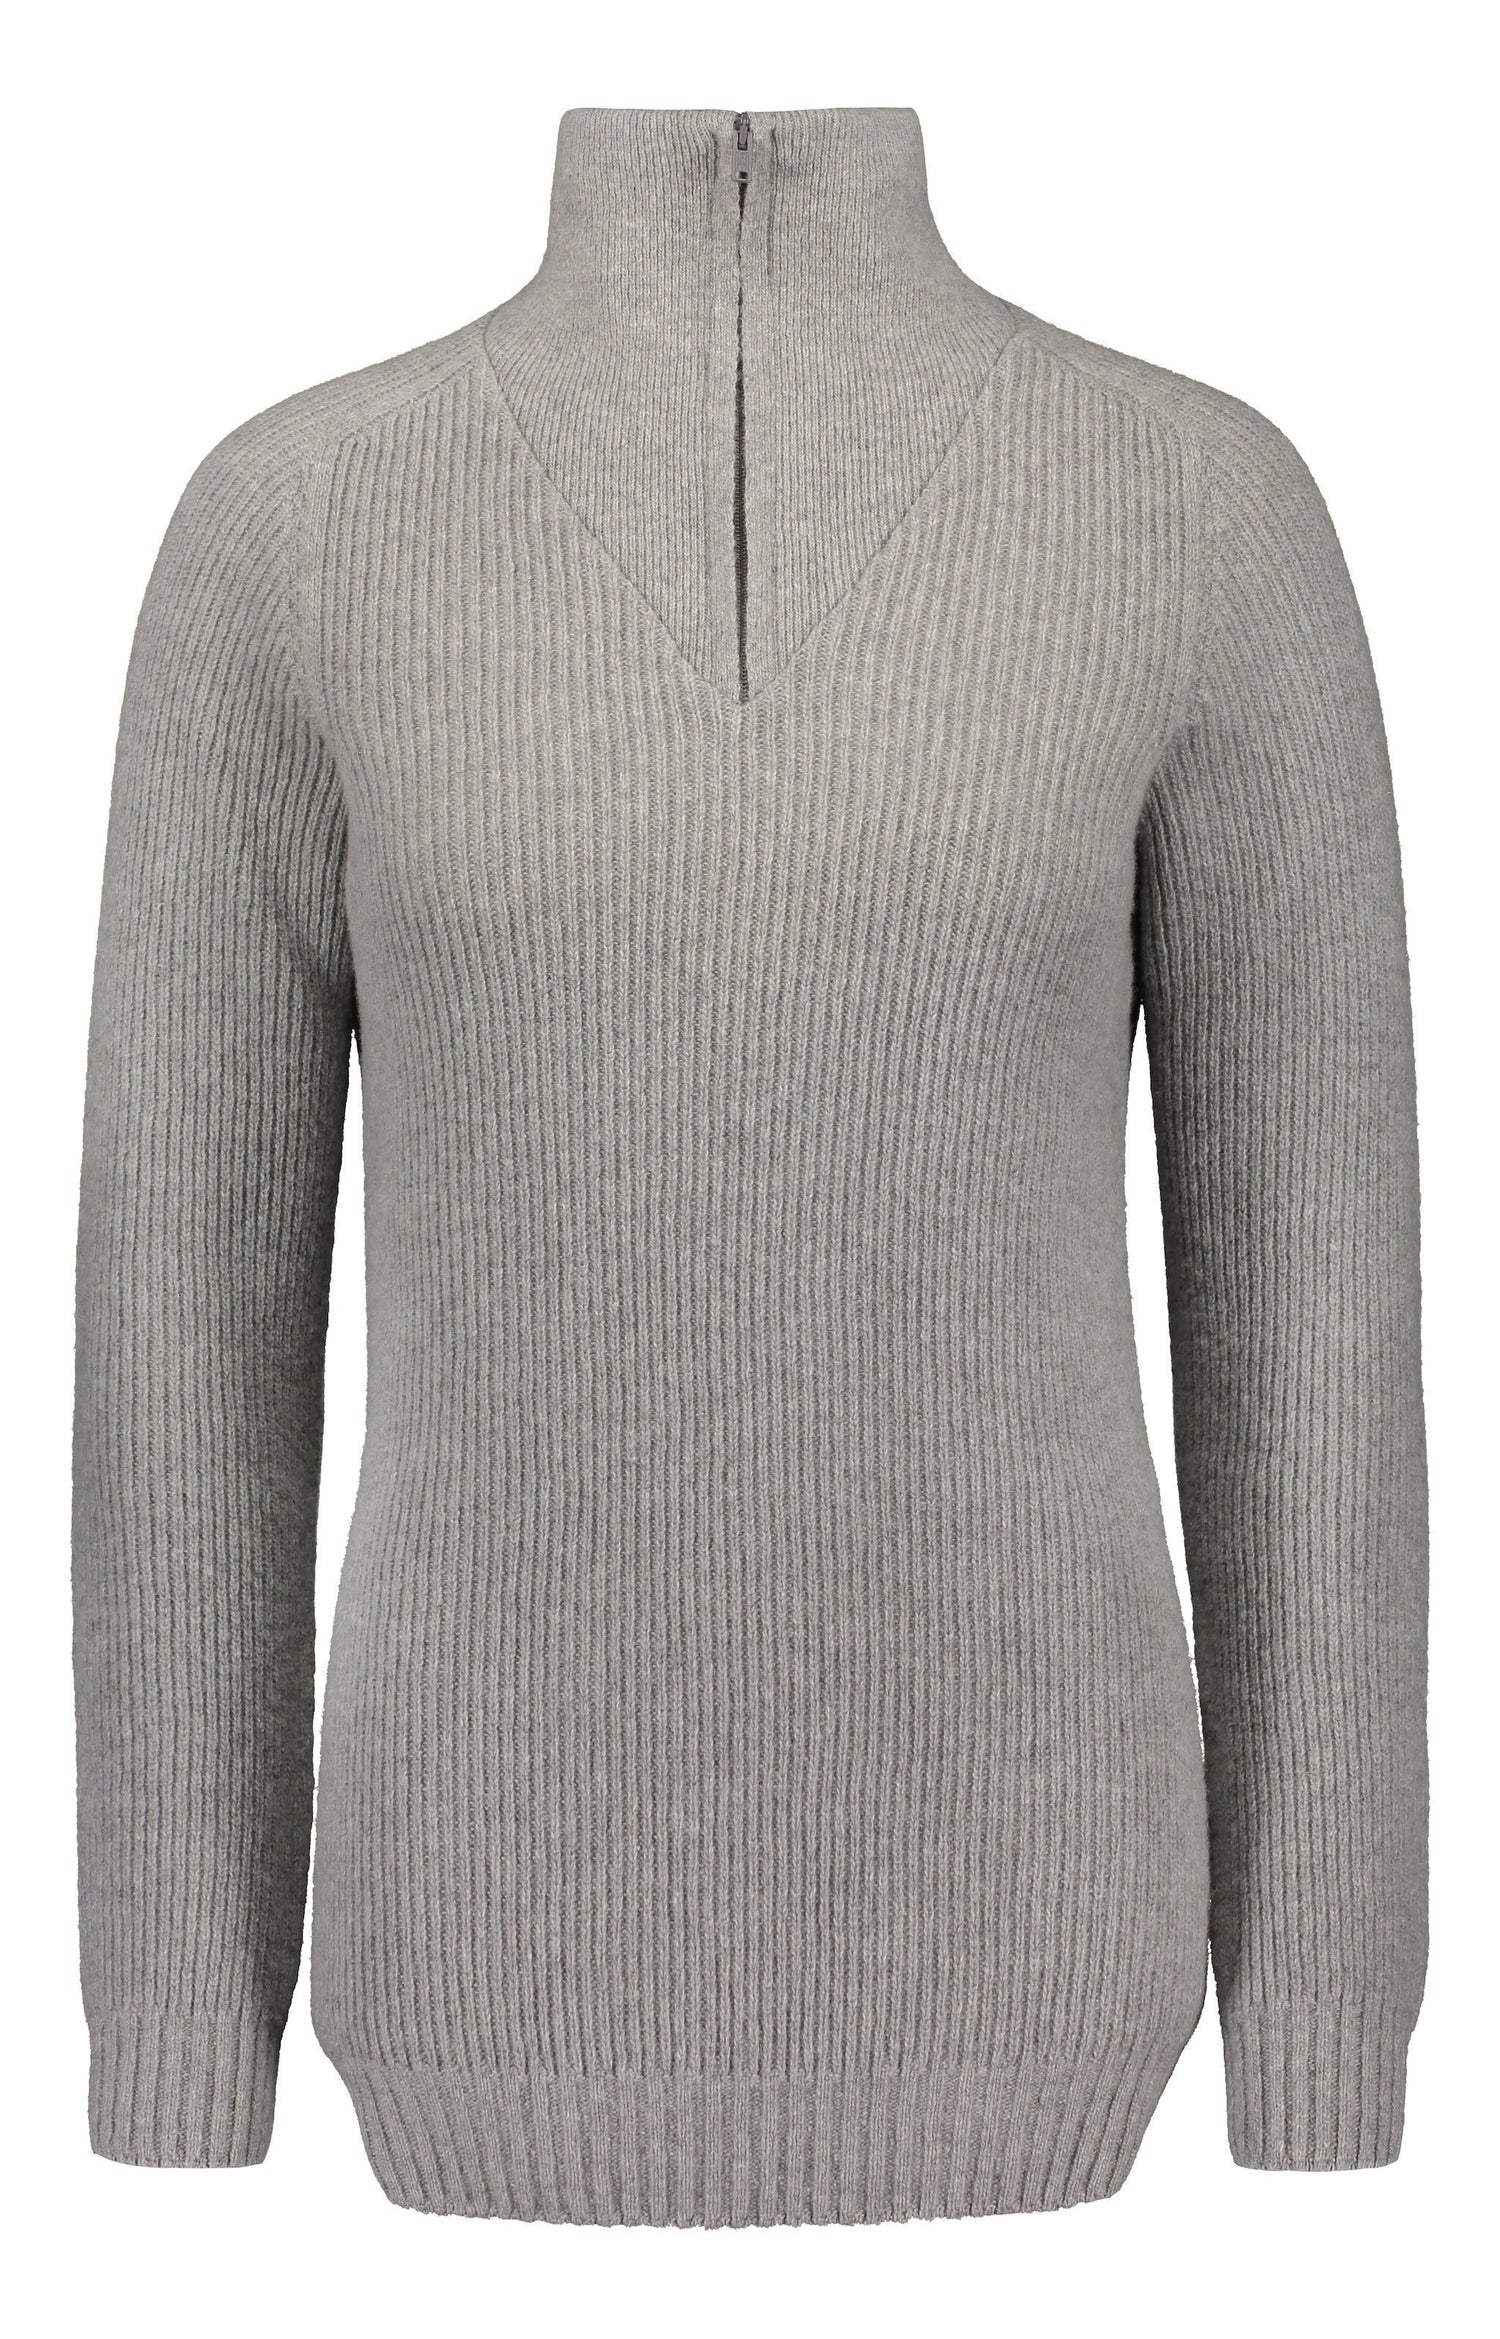 North Outdoor - W's Metso Sweater - 100 % Merino Wool - Made in Finland - Weekendbee - sustainable sportswear